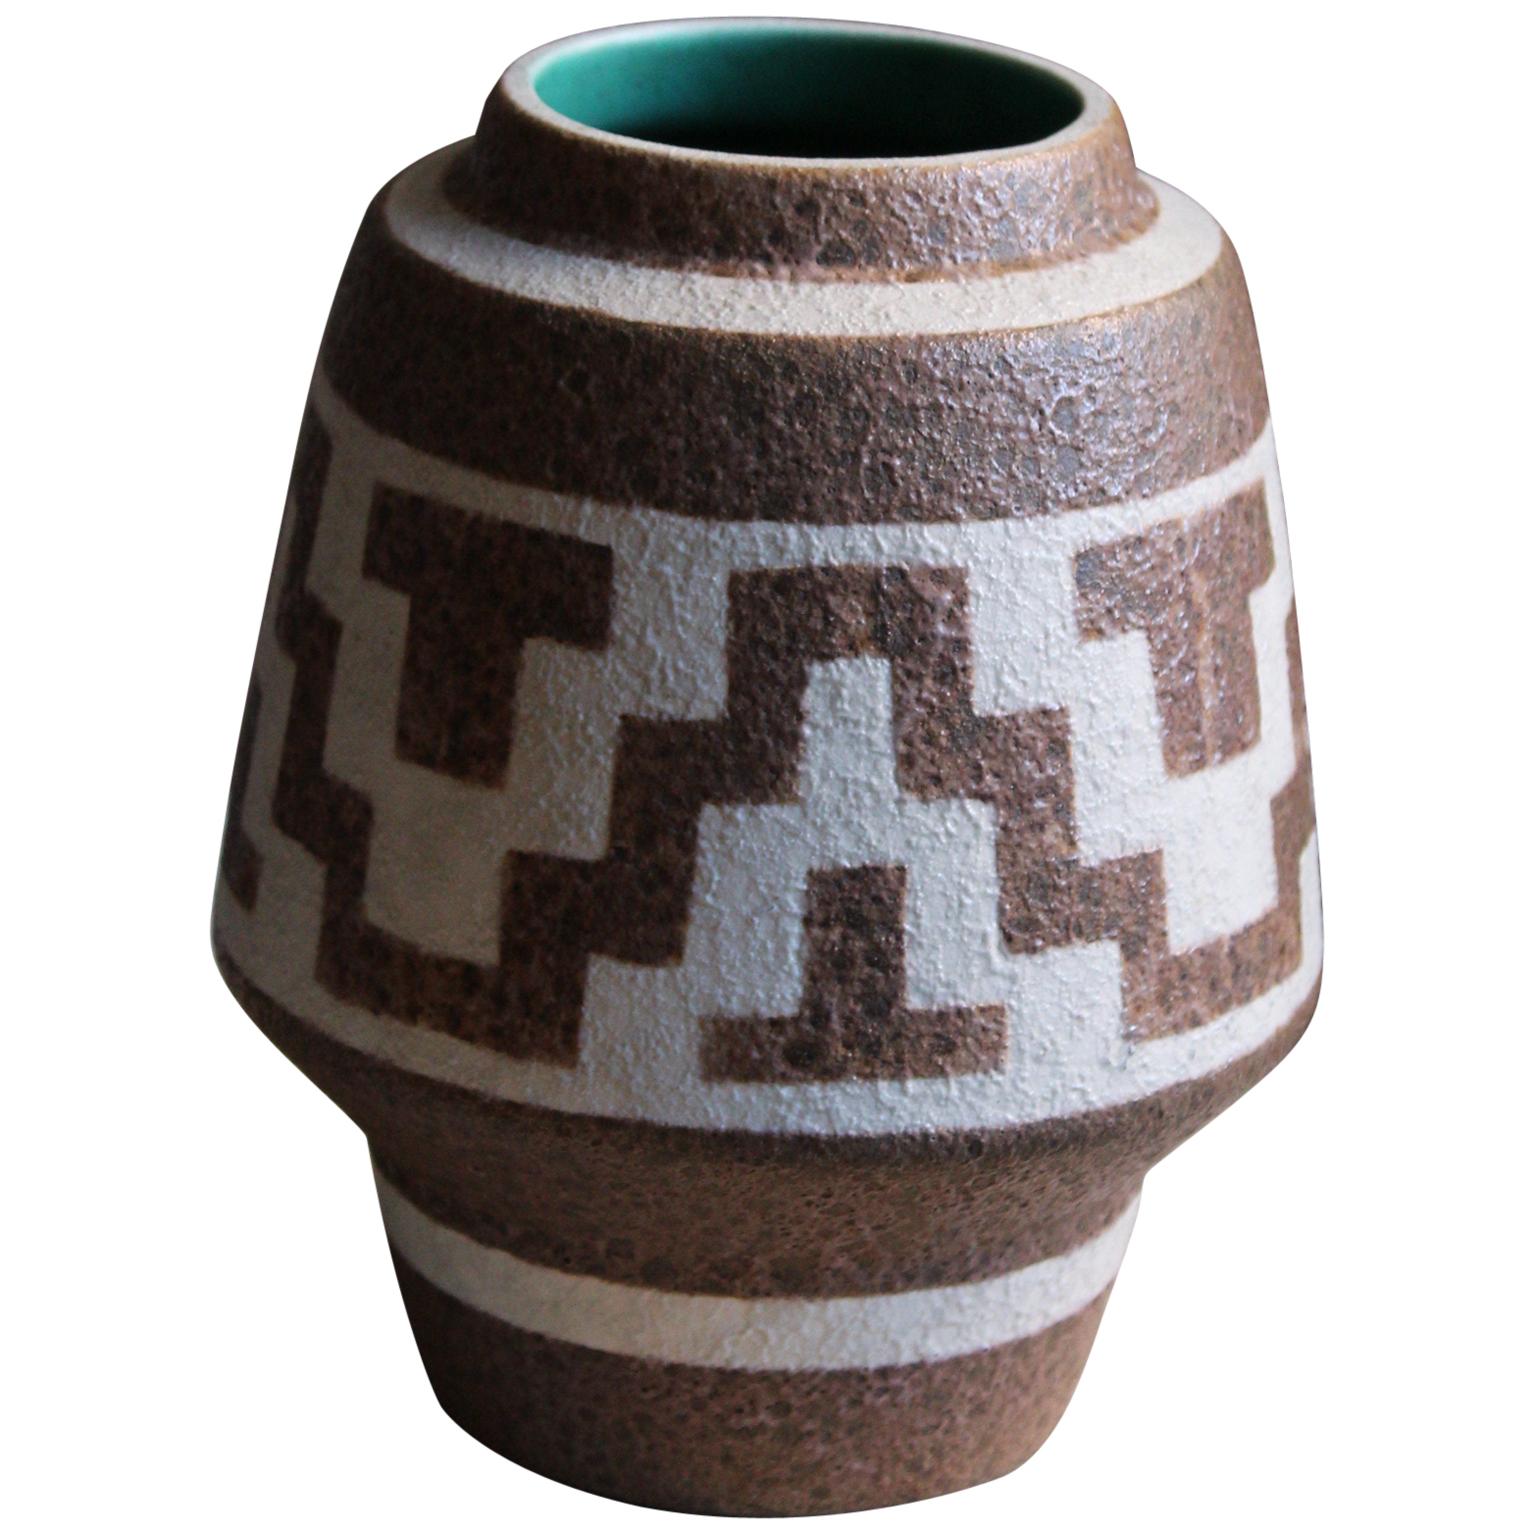 Gmundner Keramik, Vase, Beige / White / Green Stoneware, Austria, 1950s